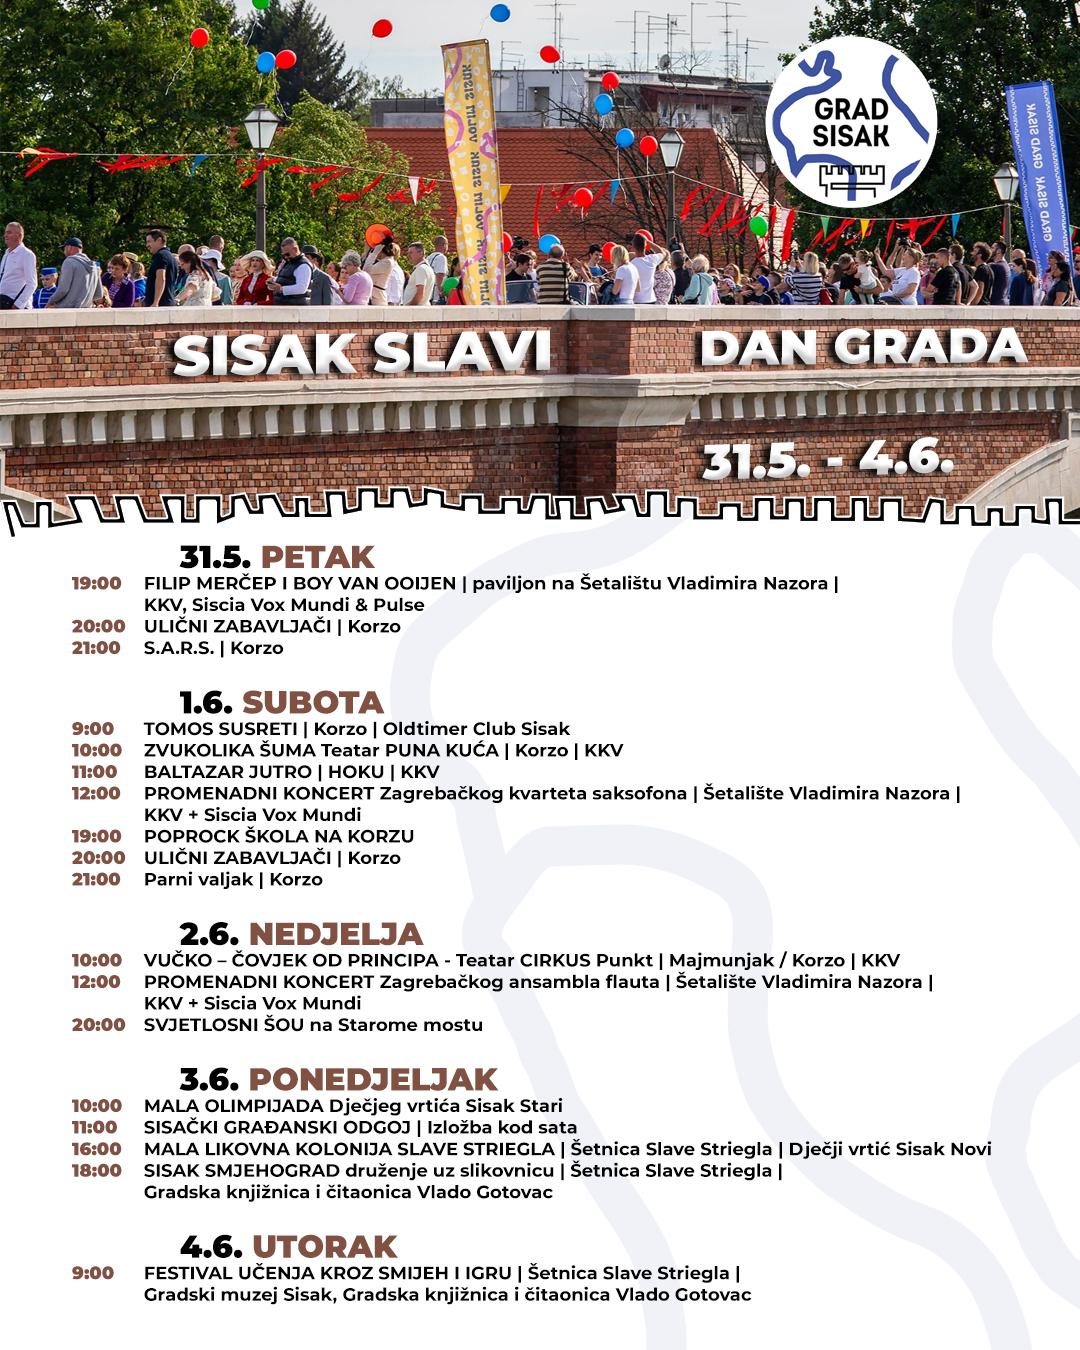 You are currently viewing Sisak slavi Dan grada od 31.5. do 4.6.